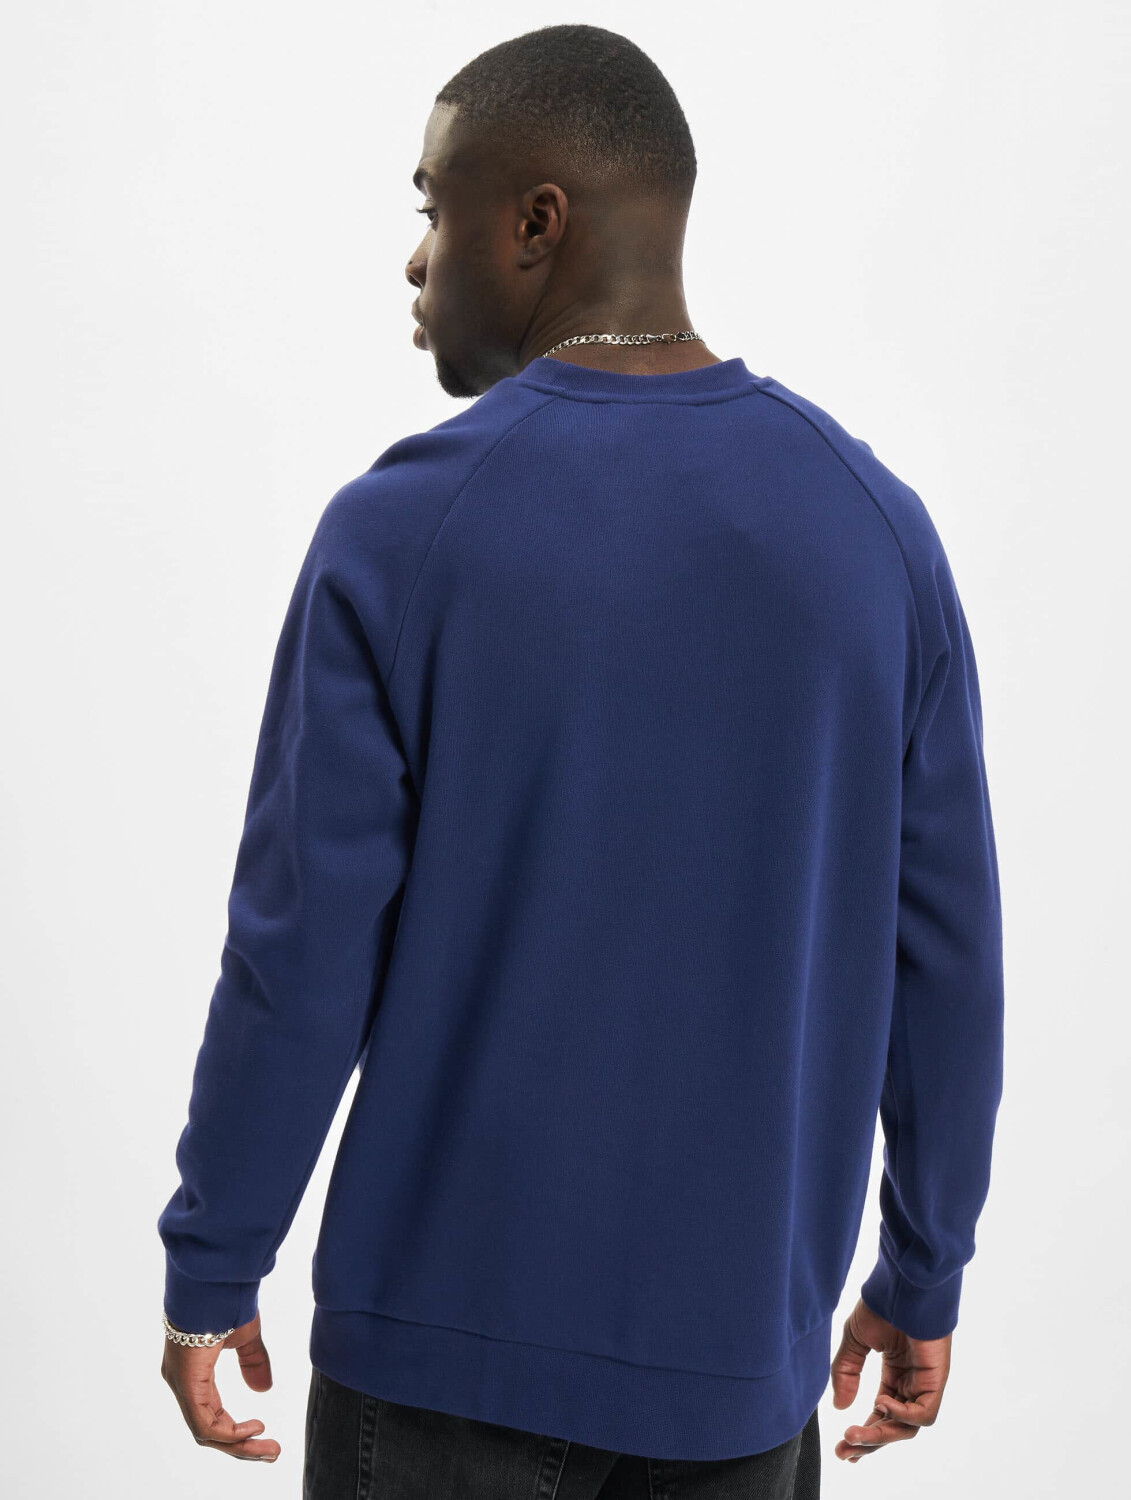 (Today) (H06654) Trefoil adicolor from dark blue – Deals Buy Best Adidas Classics on Sweatshirt £22.99